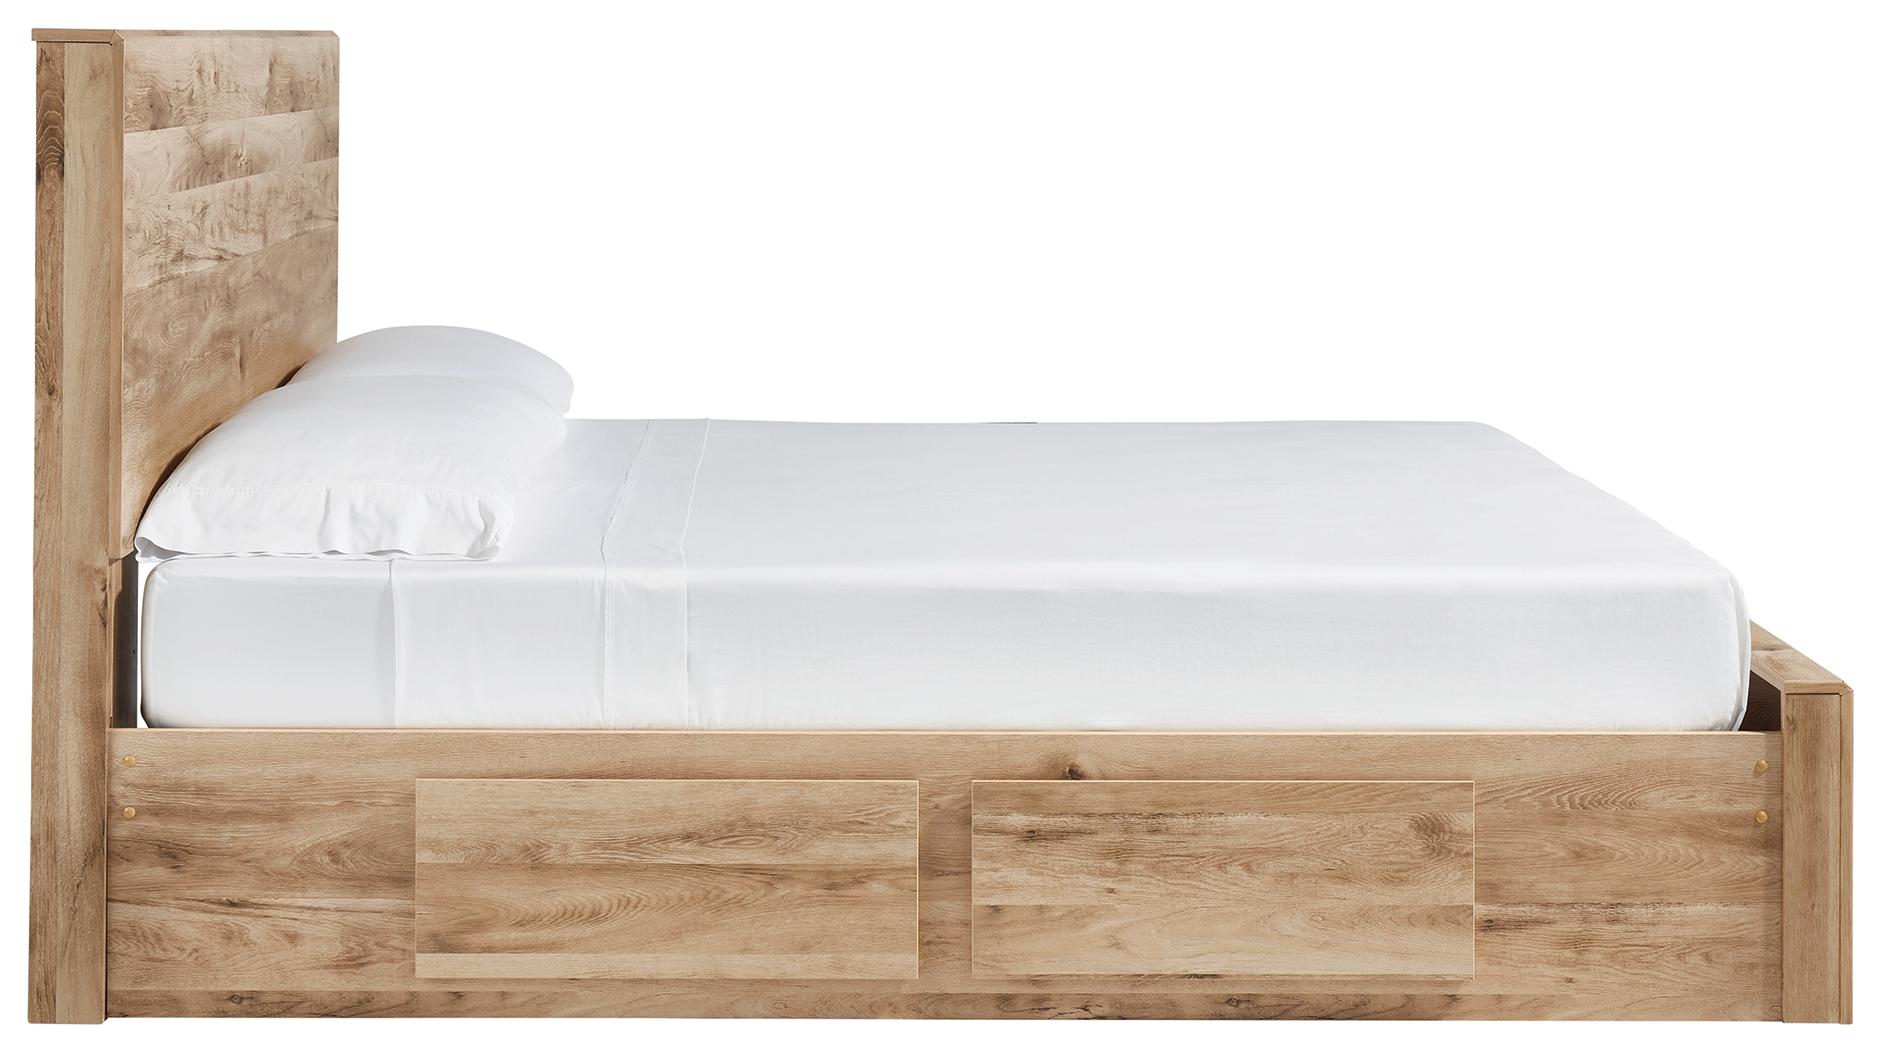 ASHLEY FURNITURE B1050B13 Hyanna King Panel Storage Bed With 2 Under Bed Storage Drawer